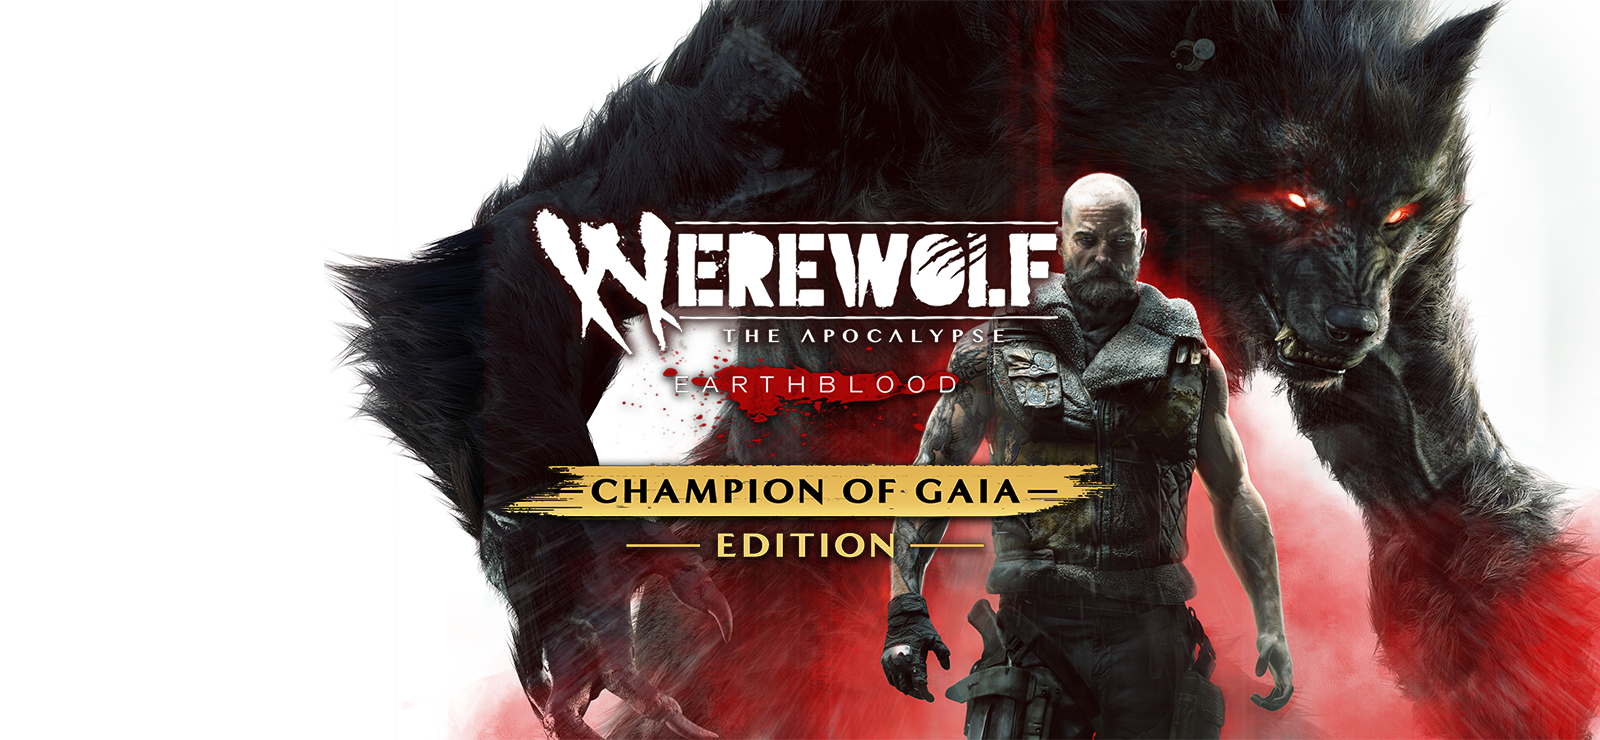 Werewolf: The Apocalypse - Earthblood - Champion Of Gaia Edition